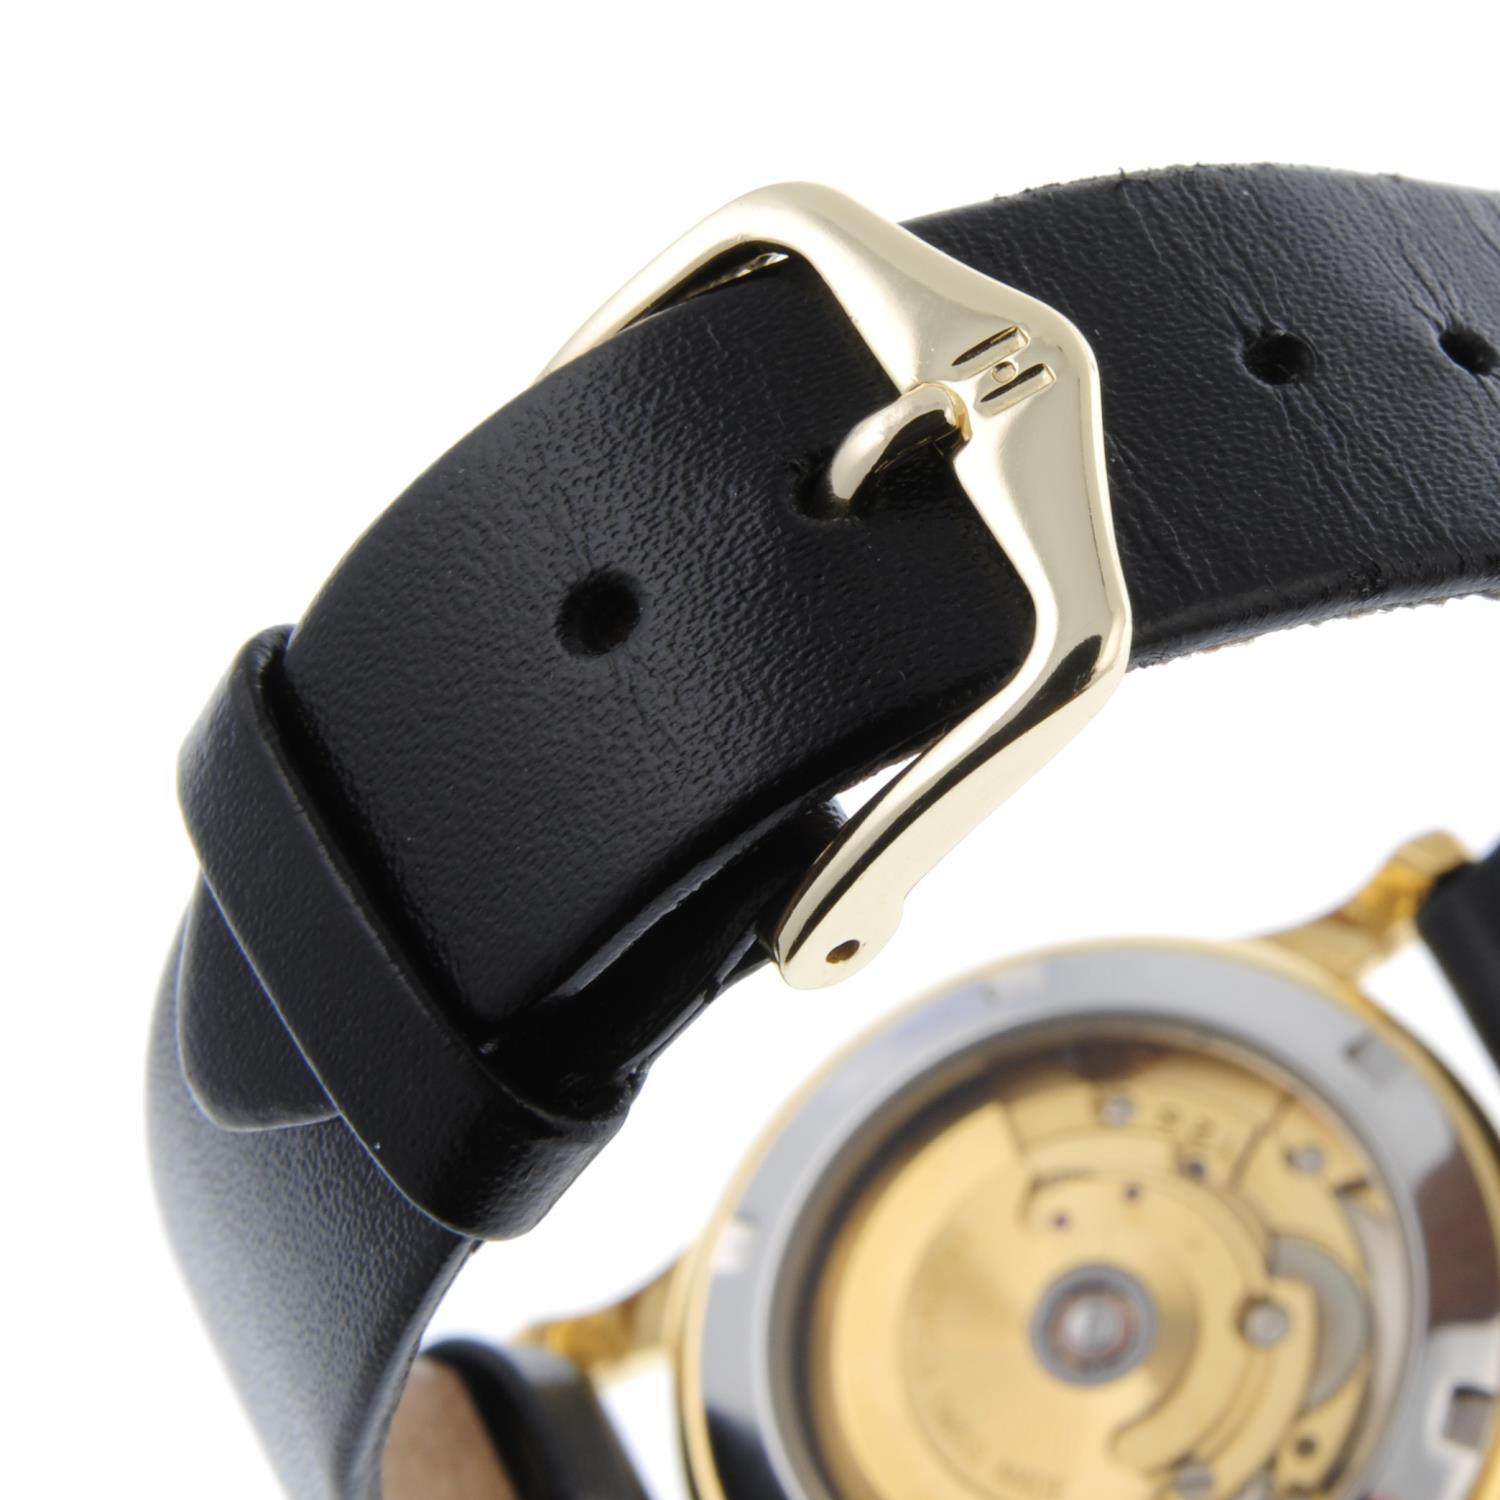 BULOVA - a gentleman's wrist watch. - Image 2 of 4